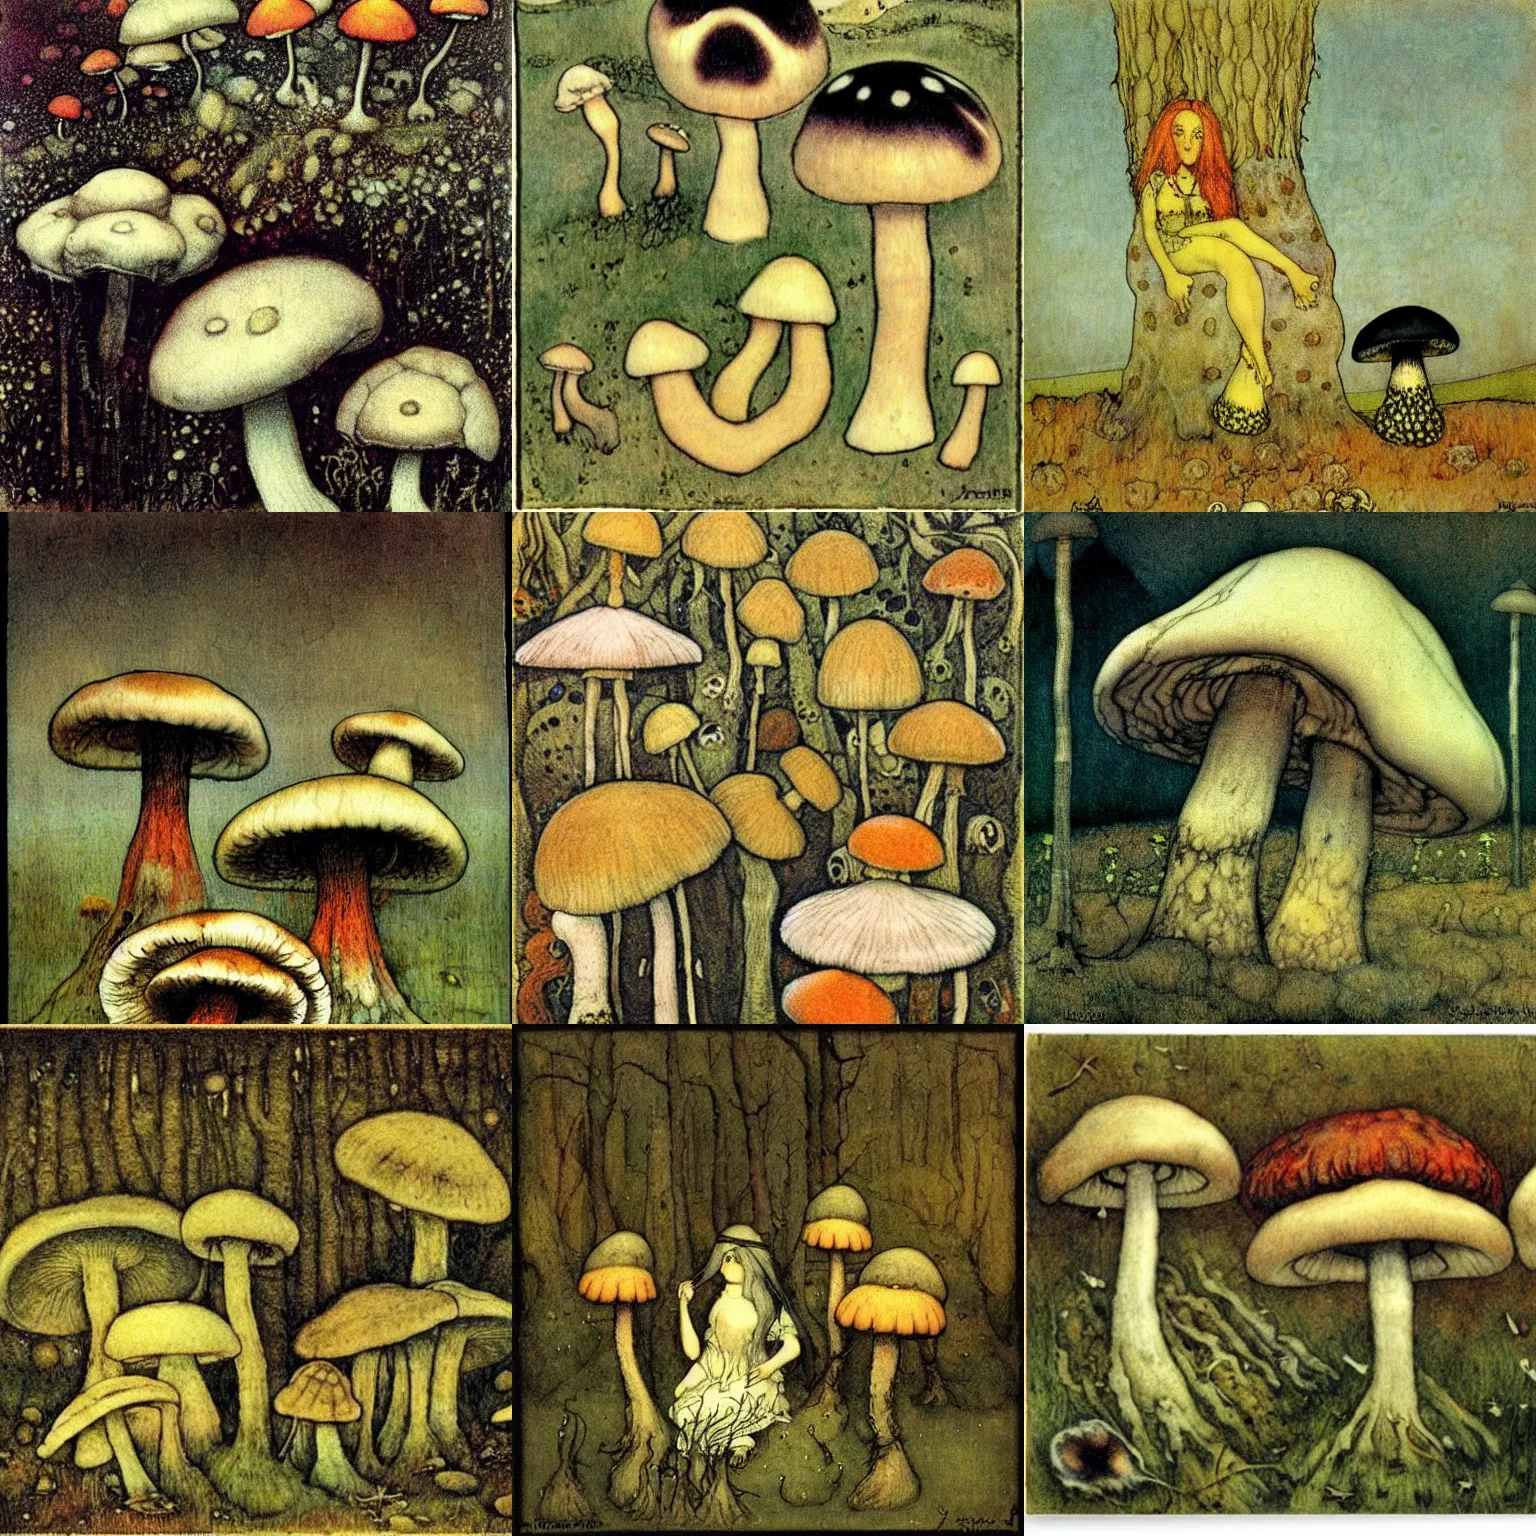 Image similar to poisonous mushrooms by John Bauer